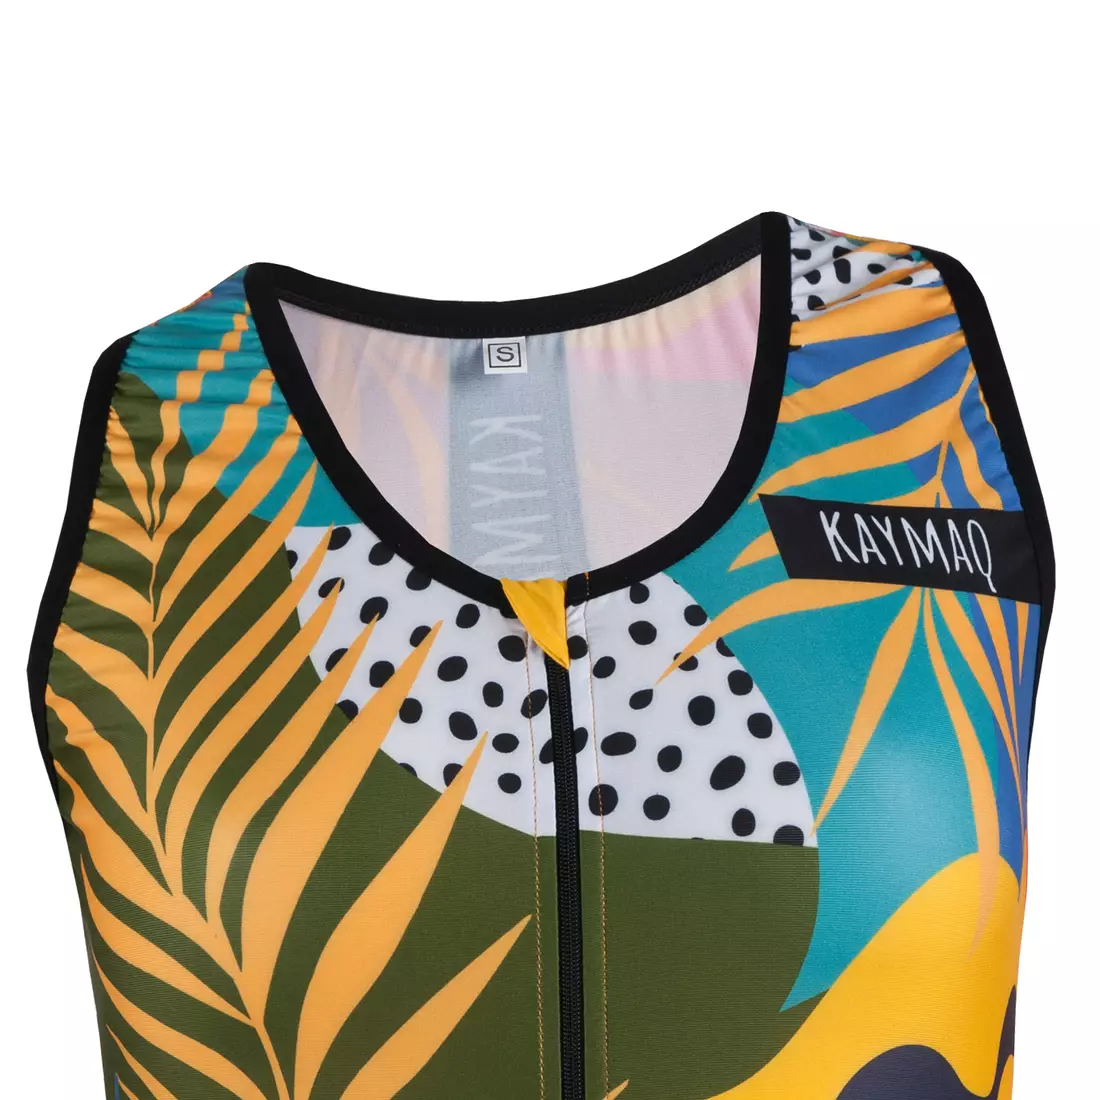 KAYMAQ DESIGN W17 dámský cyklistický dres bez rukávů